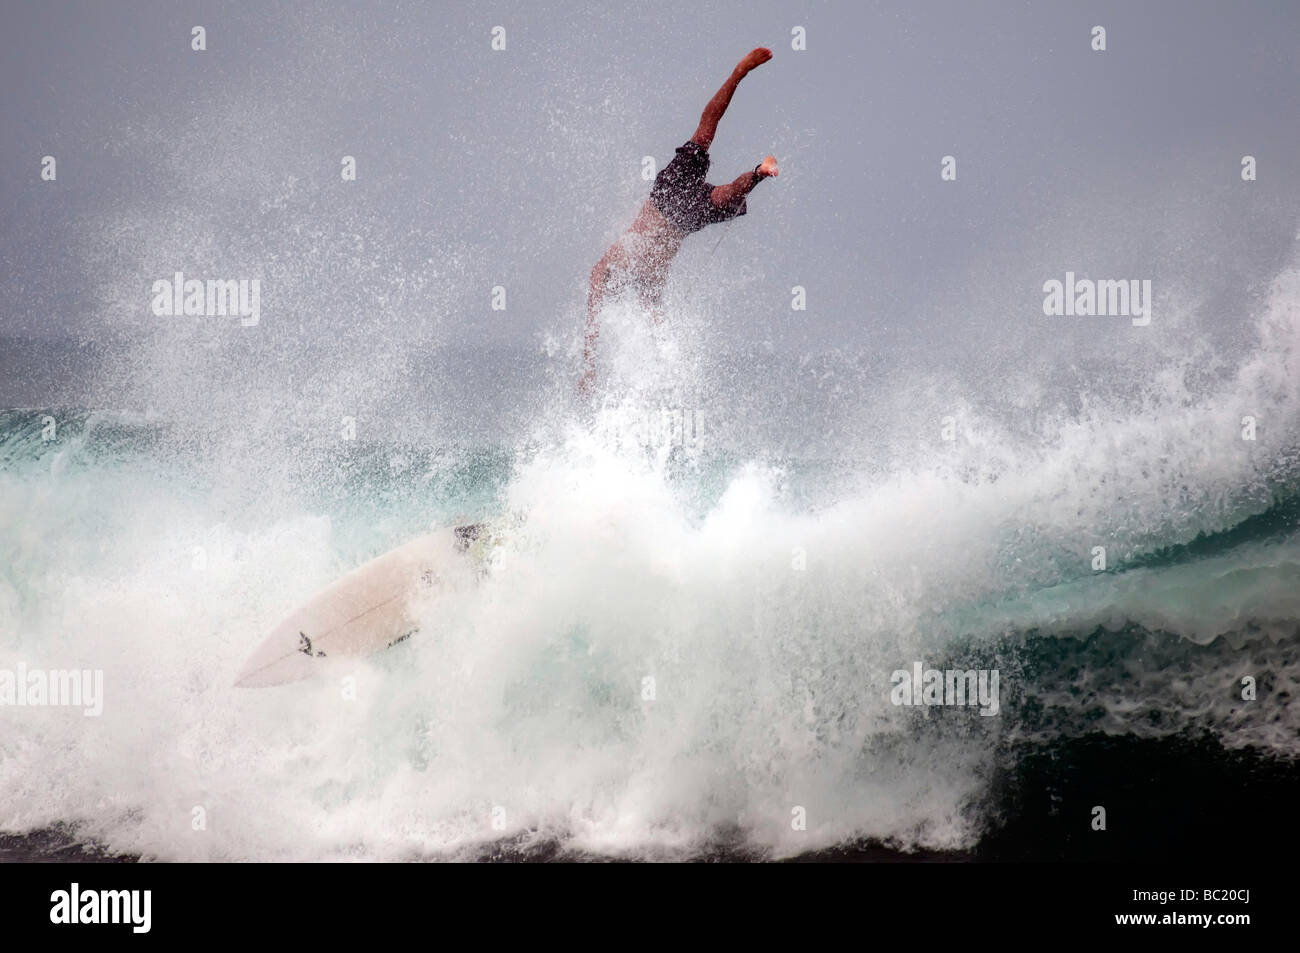 Surfer surfs wipe out, flys off of board ocean spray as wave breaks dramatic, arugam bay east coast Sri Lanka Stock Photo